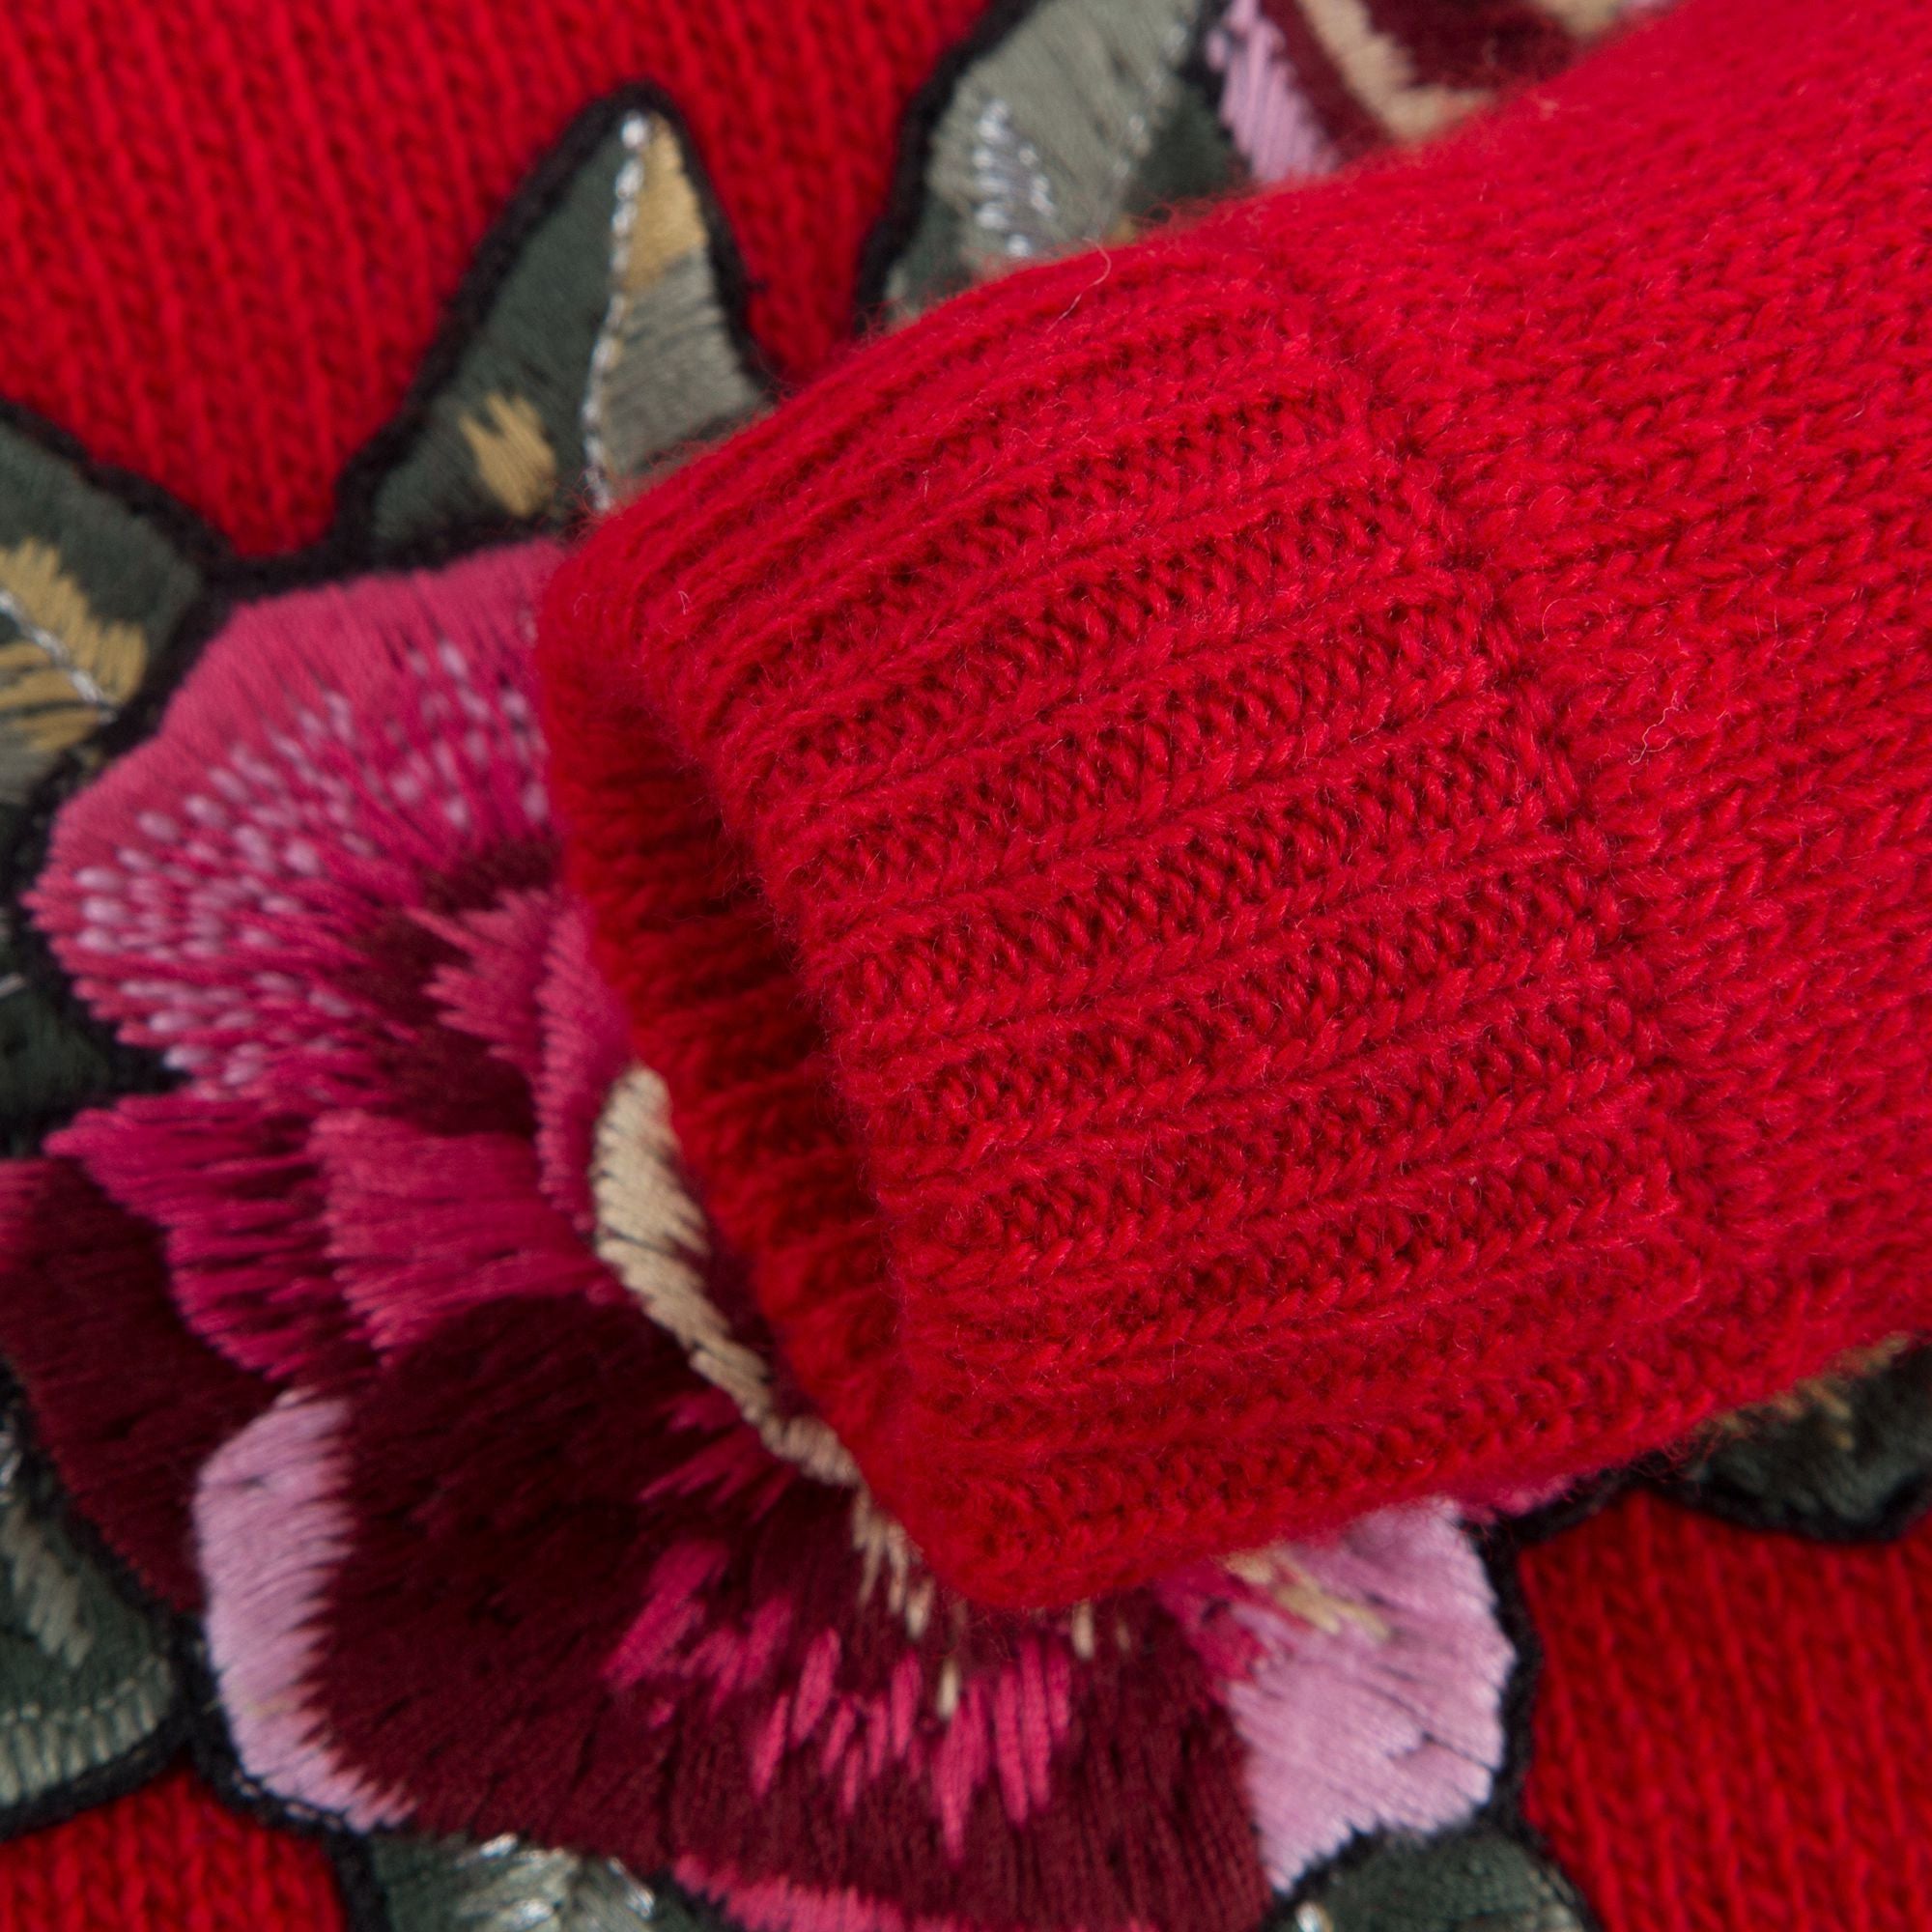 Girls Dark Red Wool Knitted Sweater